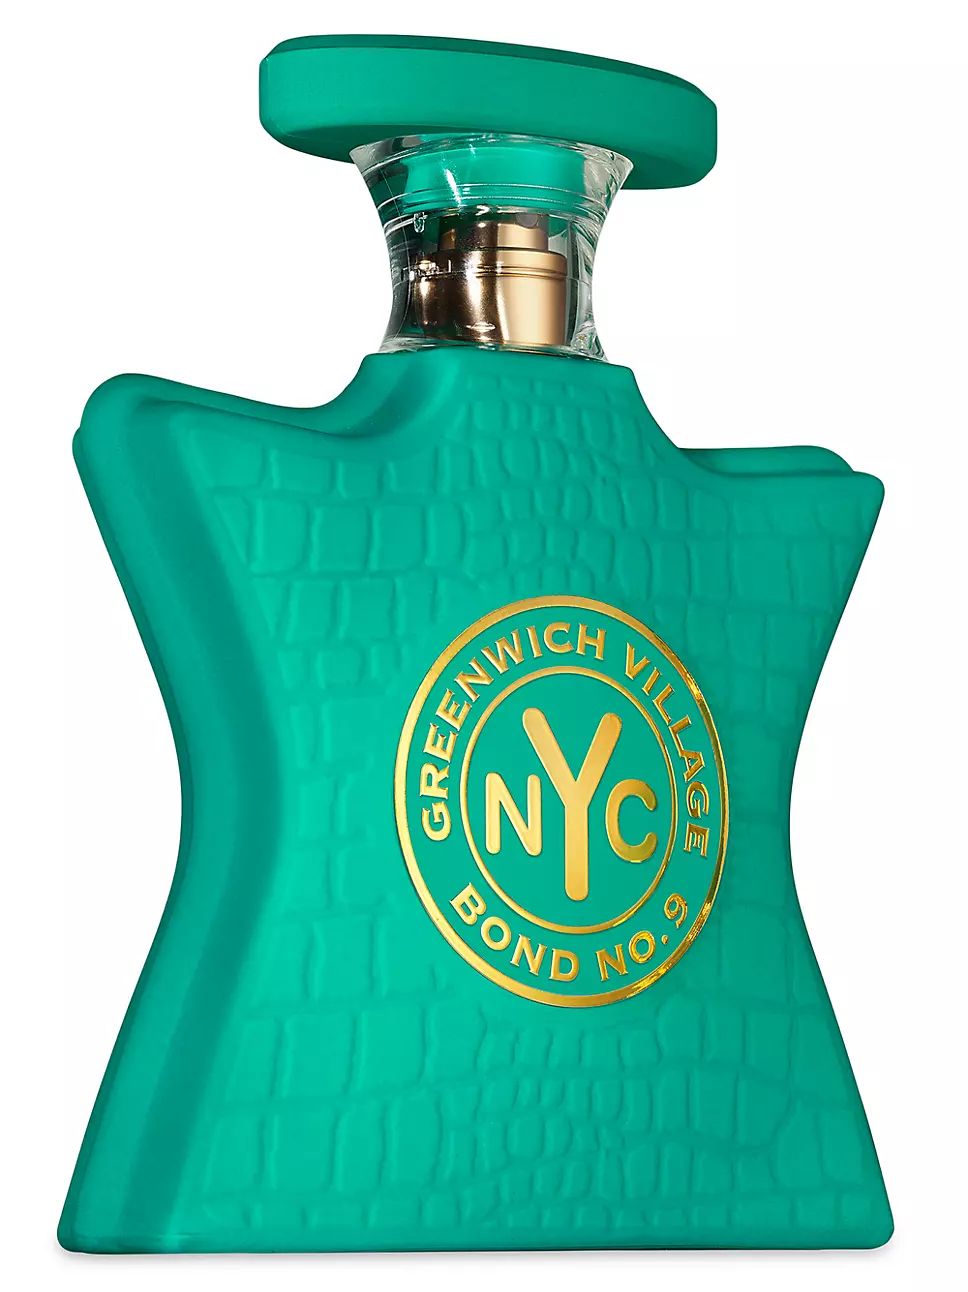 Bond No. 9 Greenwich Village Perfume | Saks Fifth Avenue